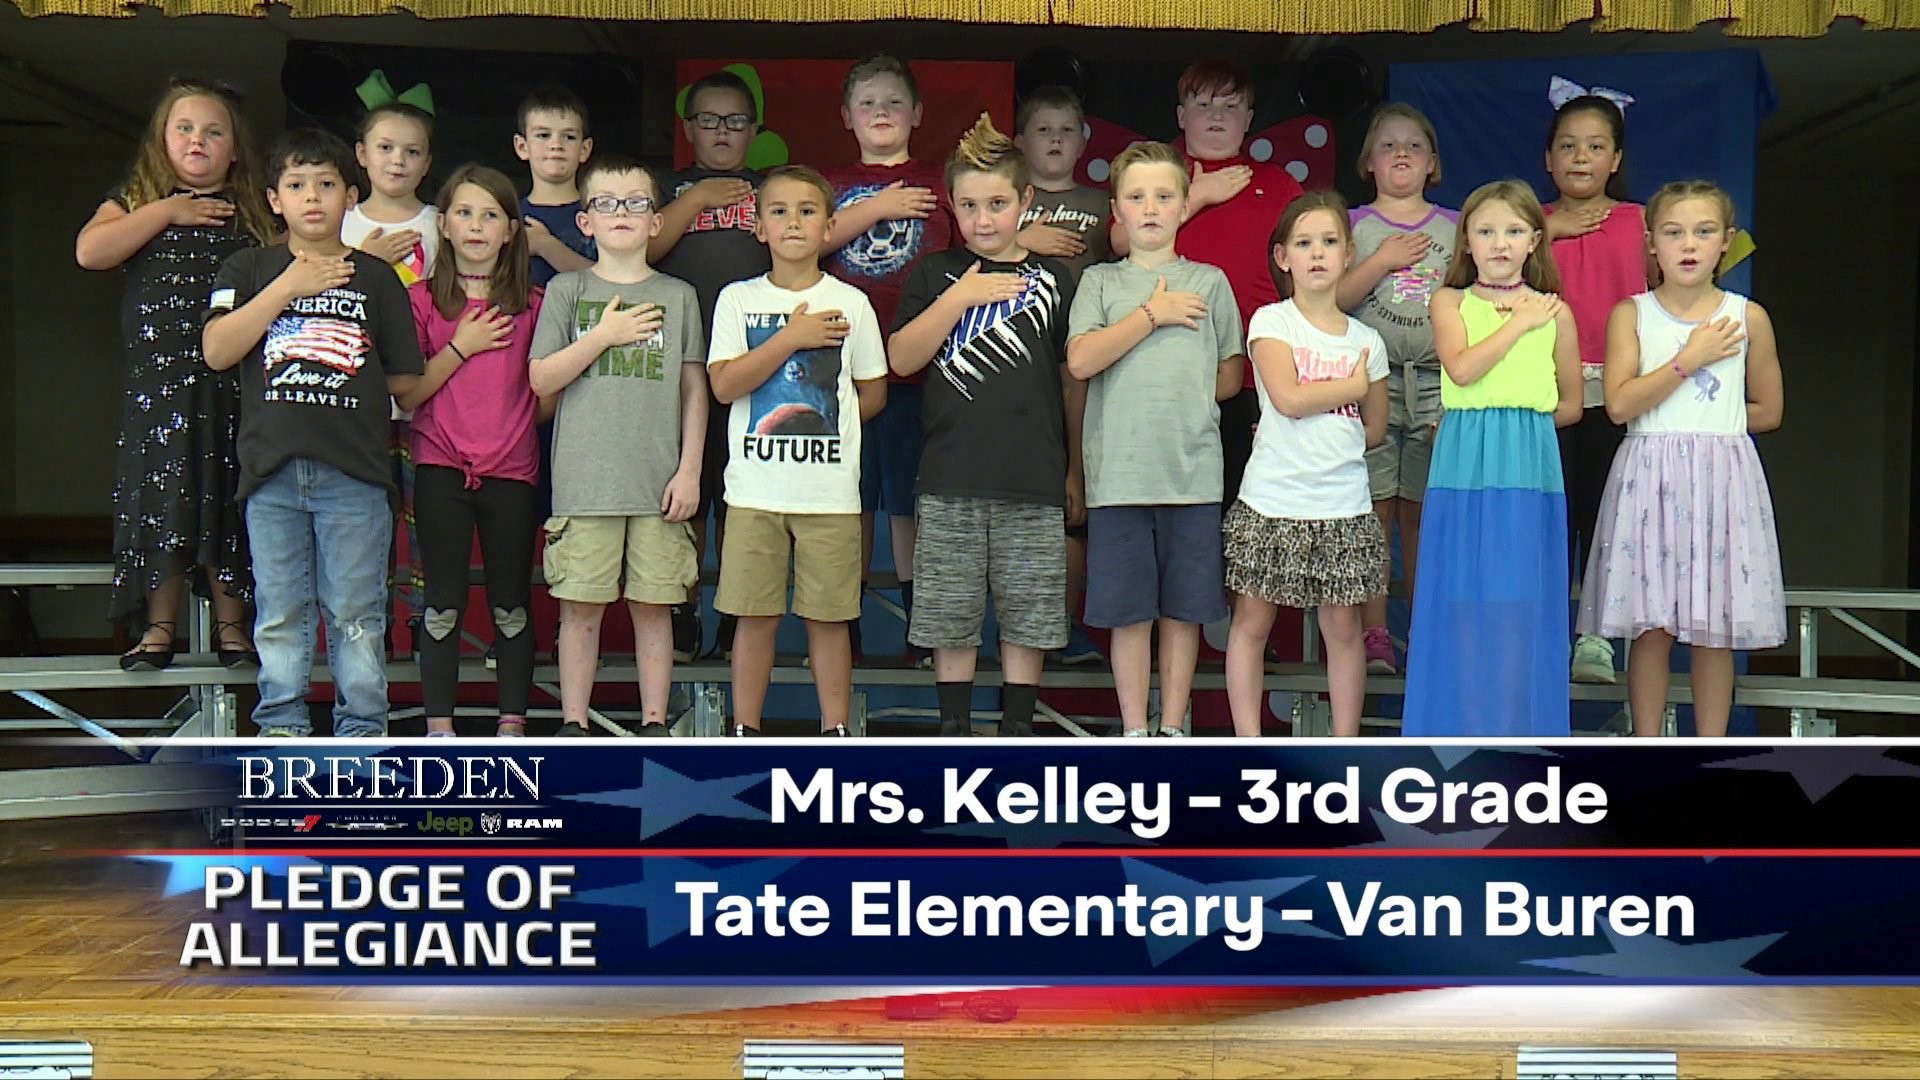 Mrs. Kelley 3rd Grade Tate Elementary, Van Buren